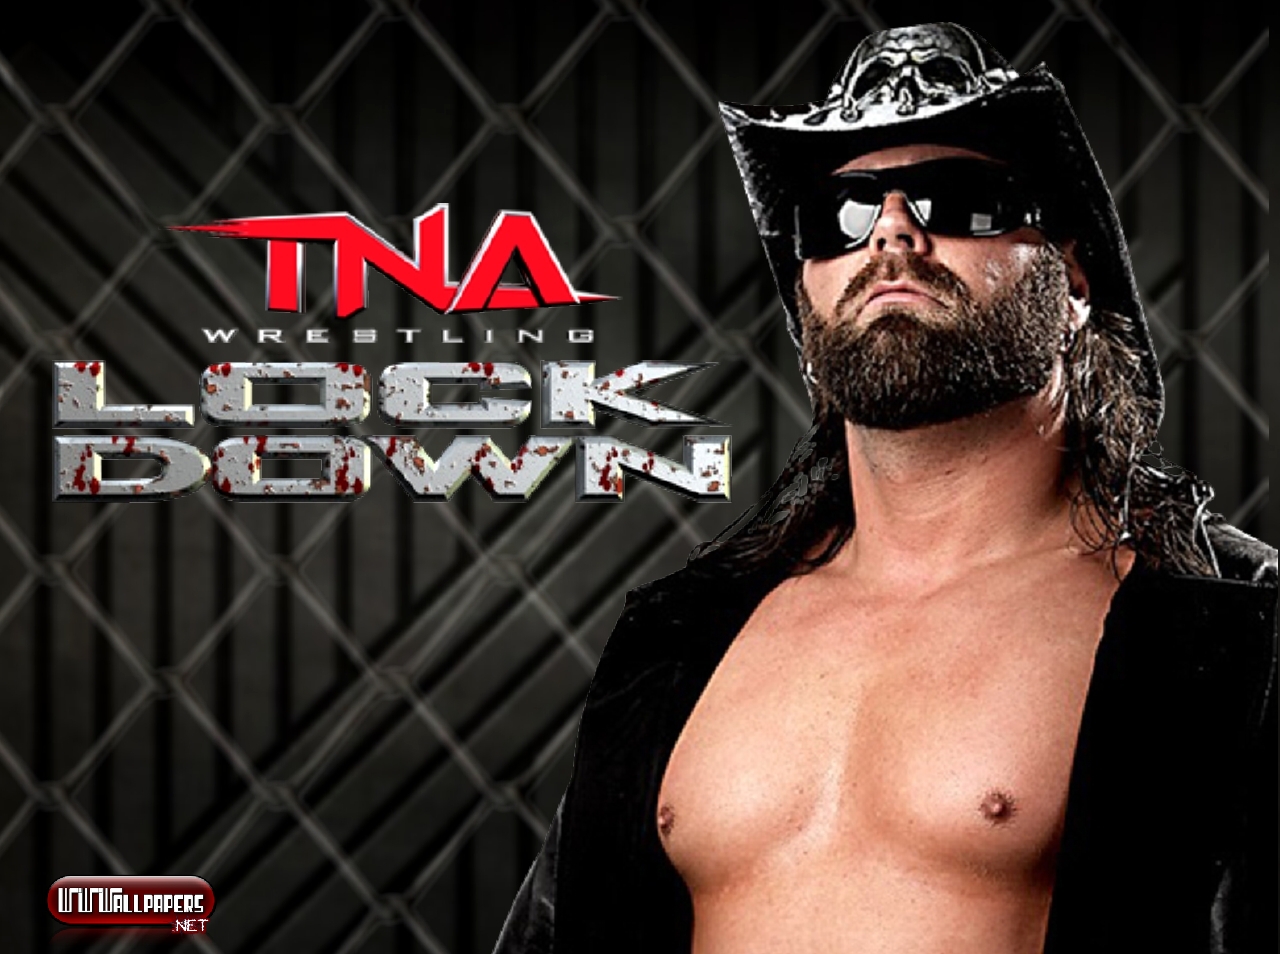 Wwe на русском от 545. WWE на русском. TNA 1/2. TNA дискография. Реслинг от 545 ТВ.